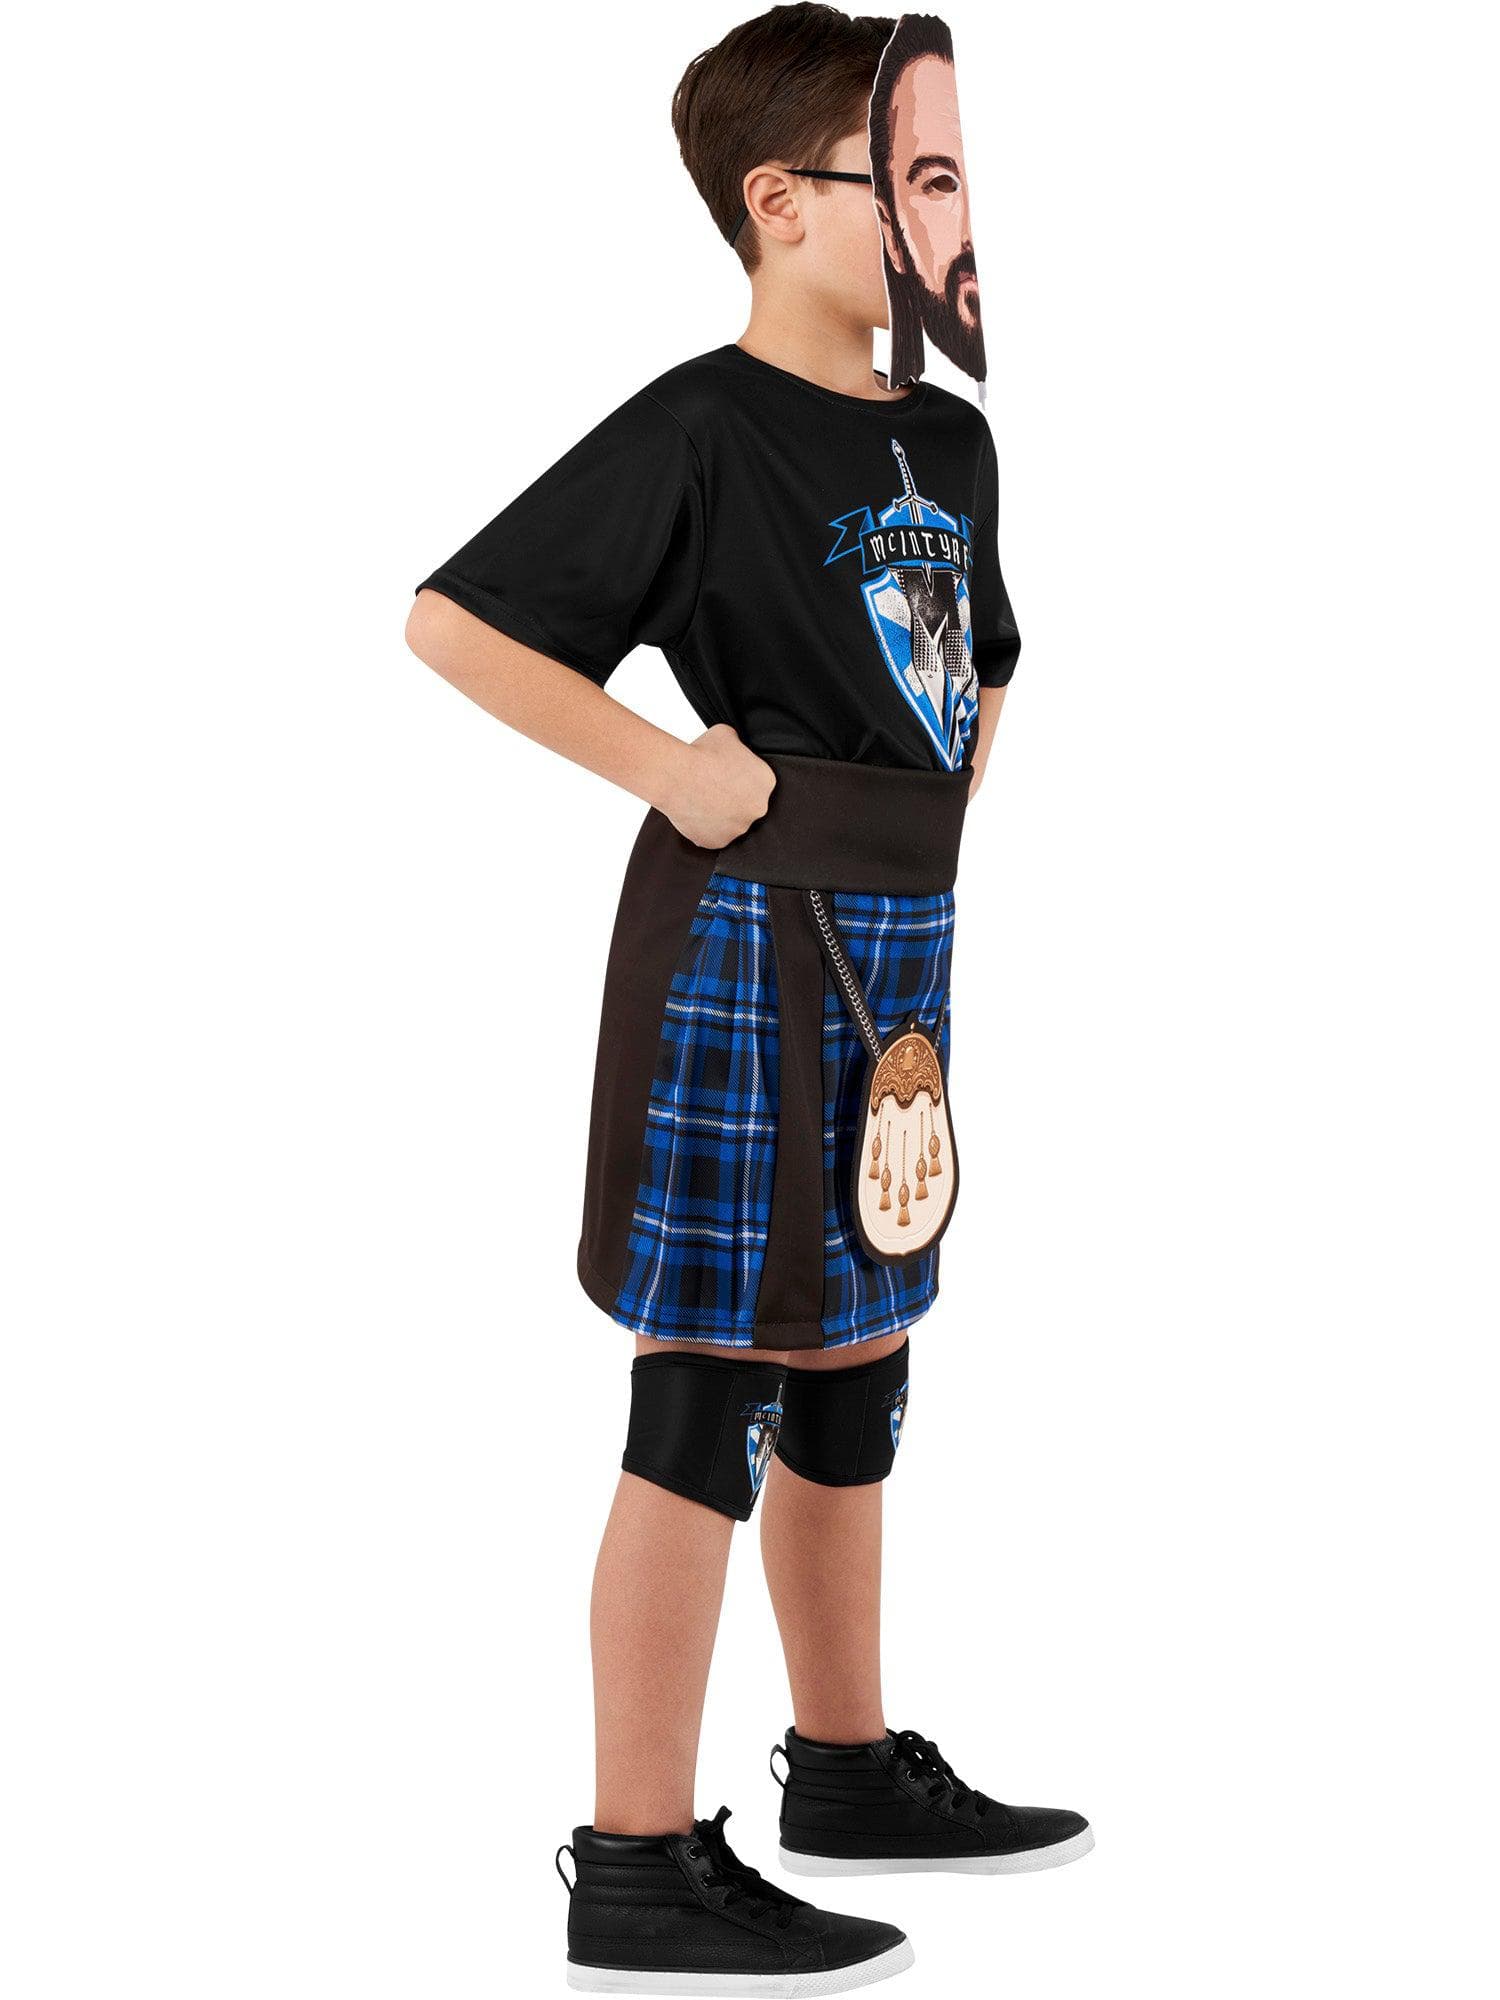 WWE Drew McIntyre Kids Costume - costumes.com